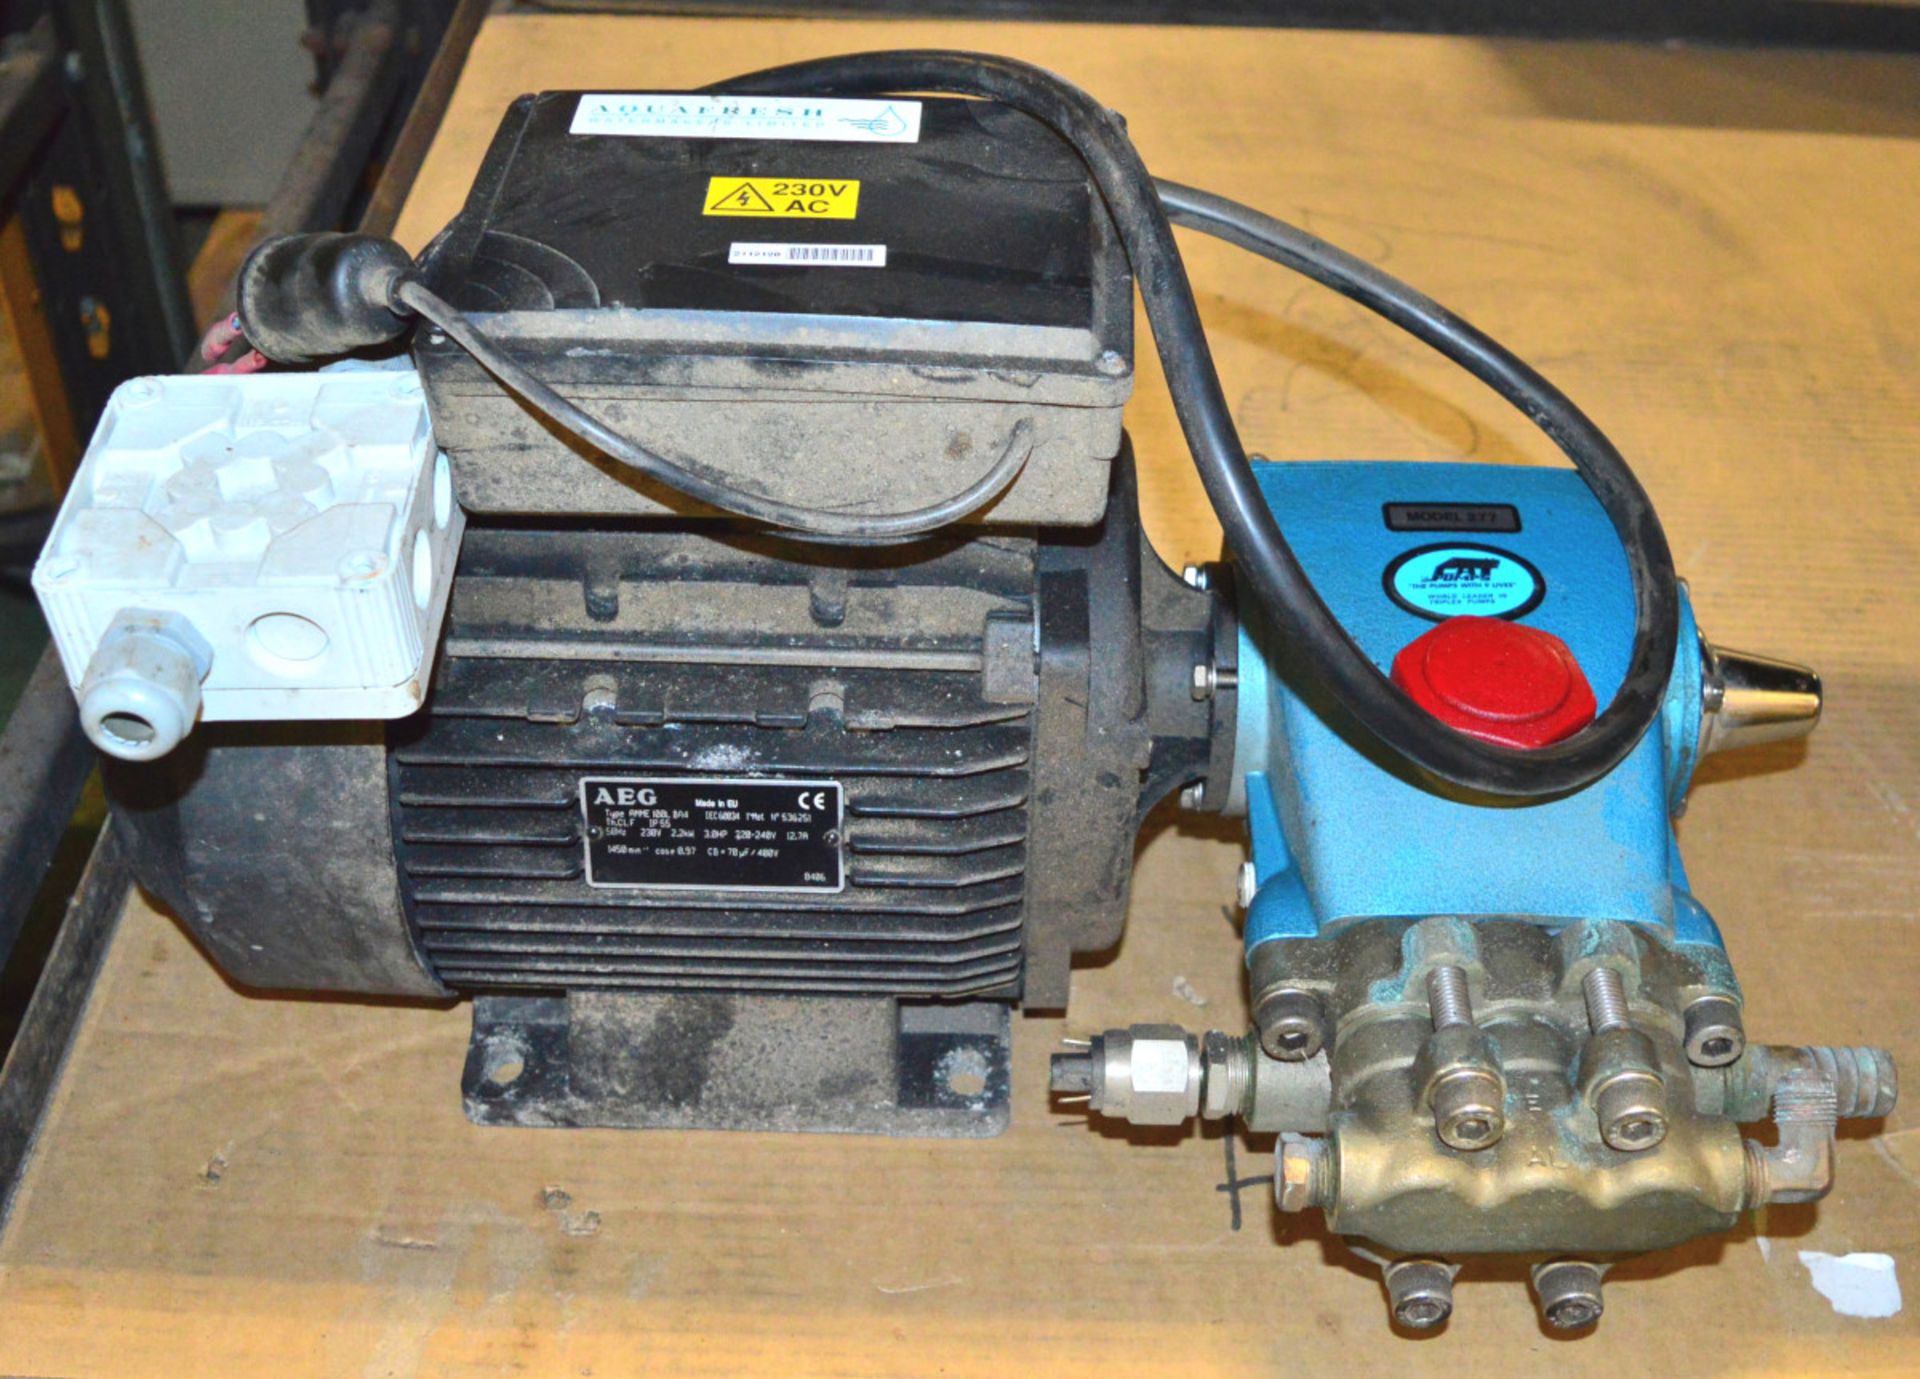 CAT Pump. AEG Motor 230V 3HP 50Hz